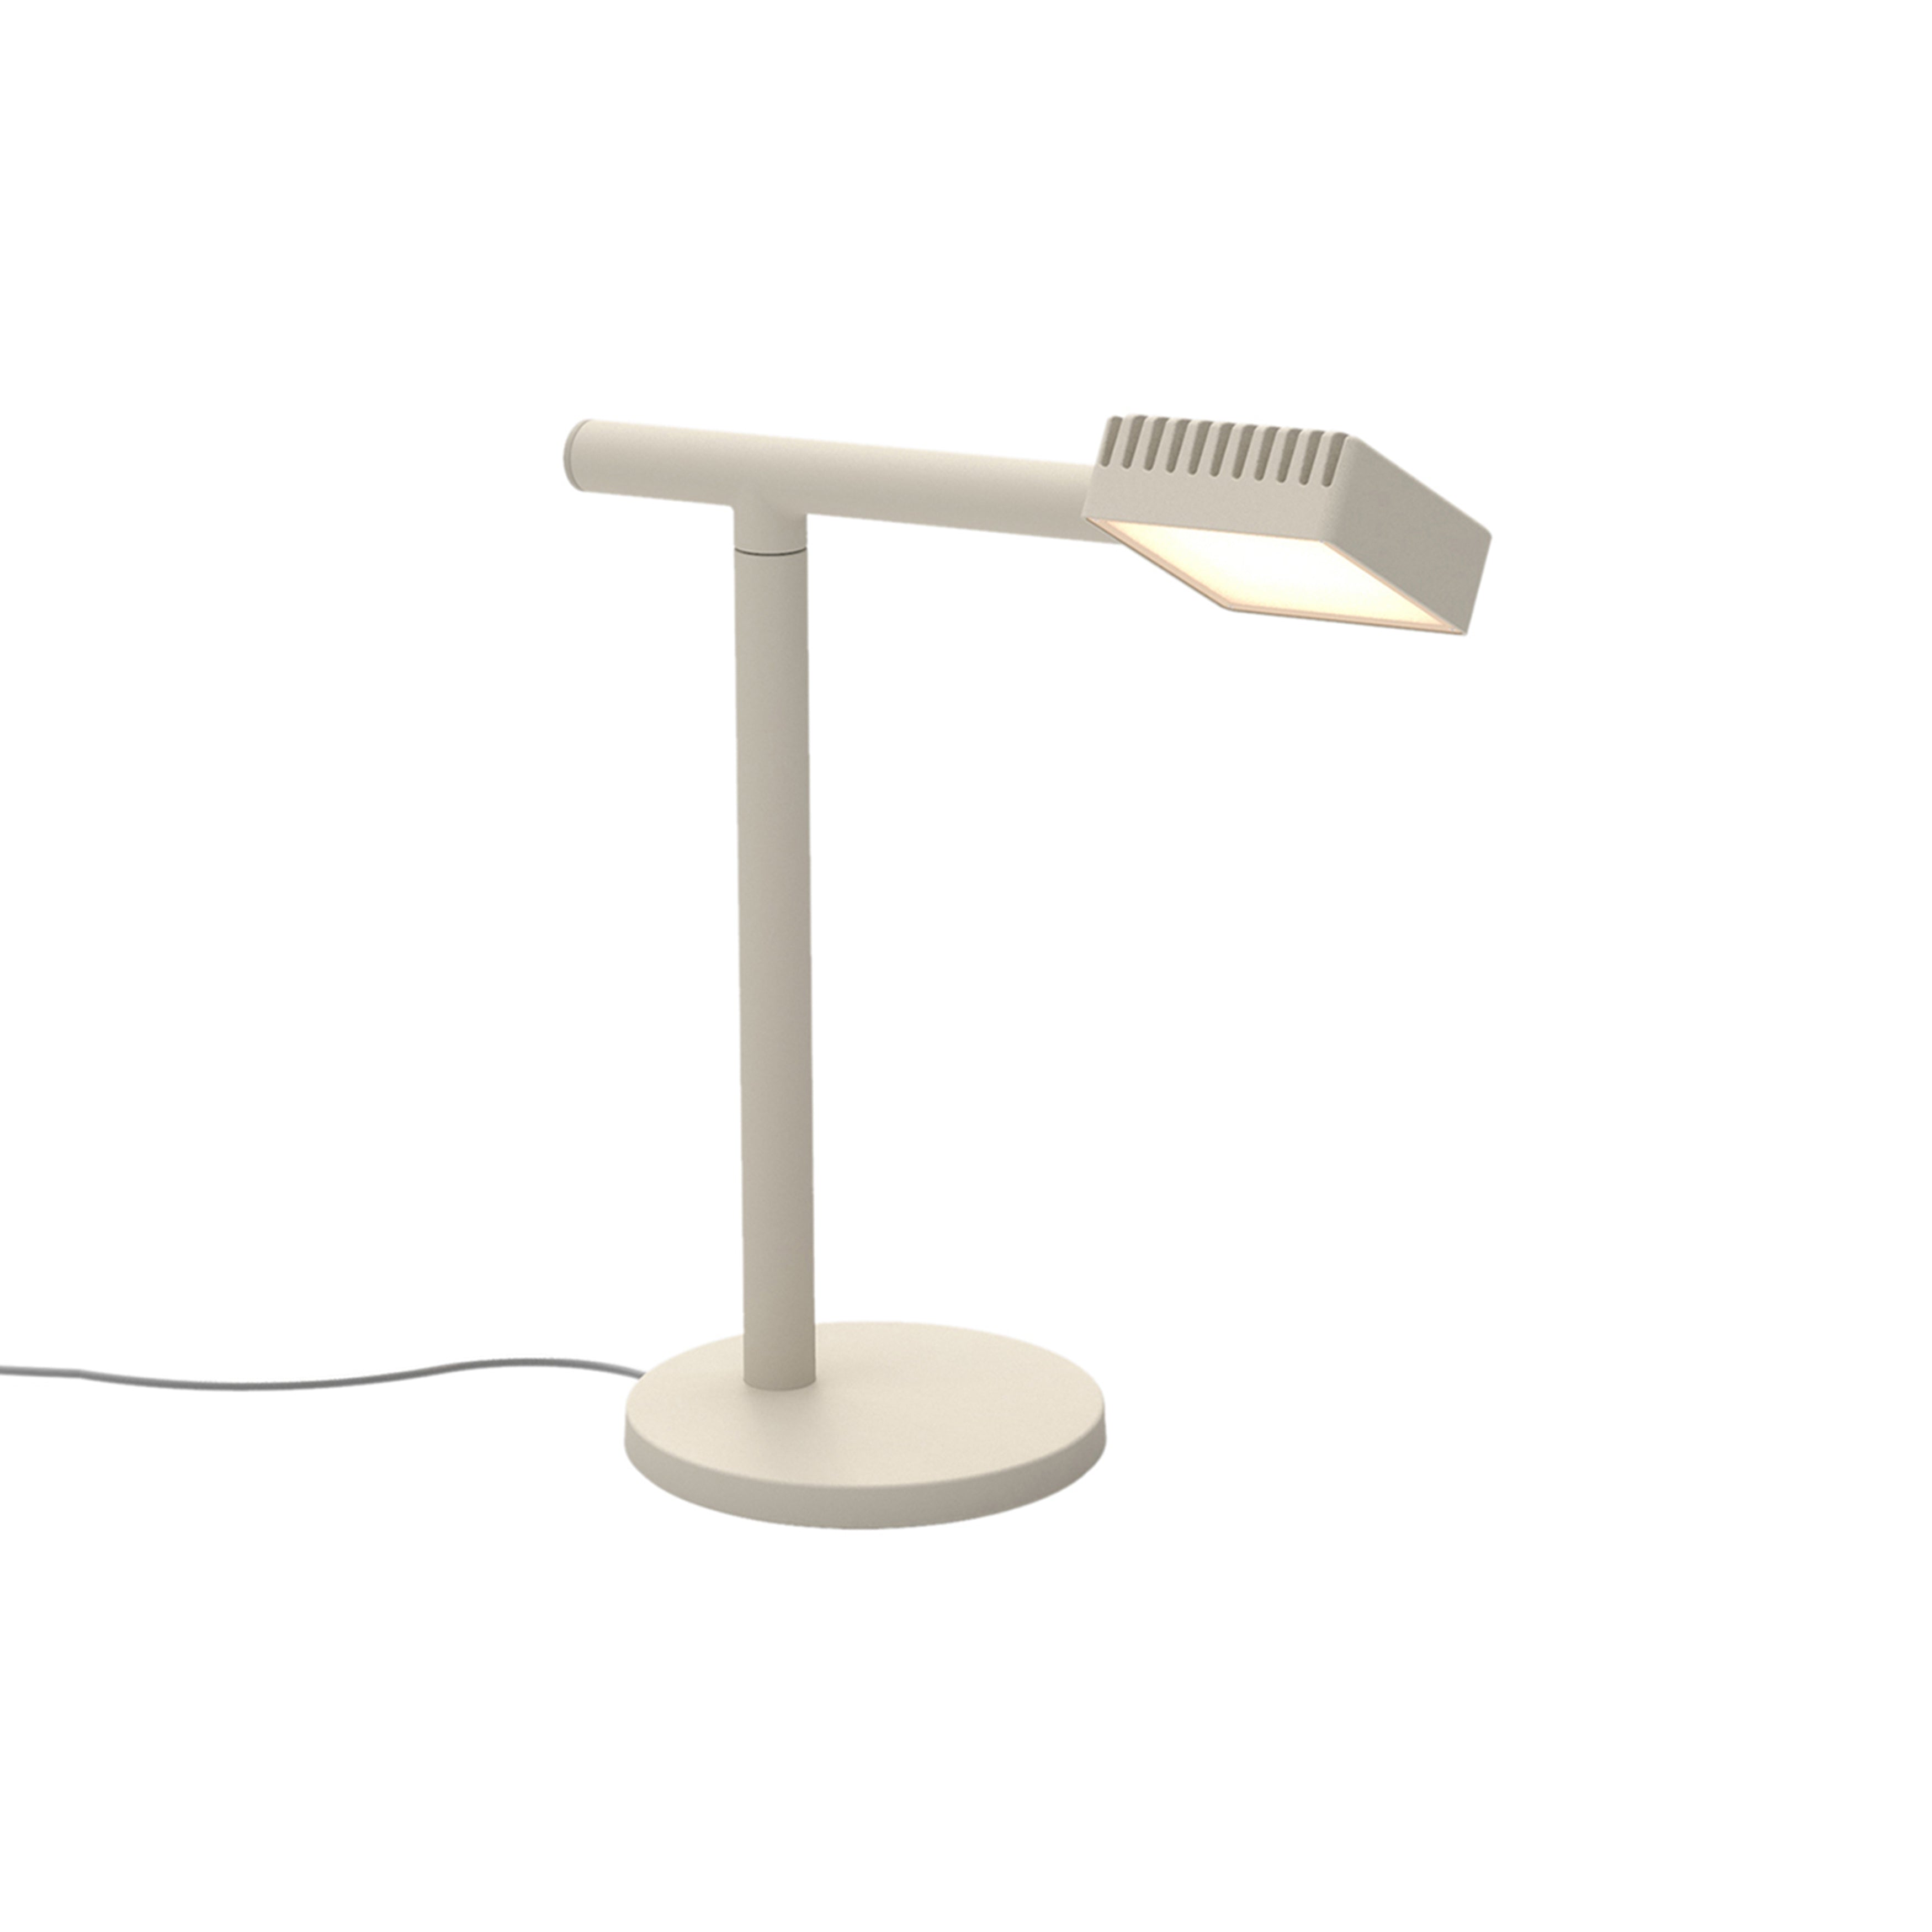 Dorval 02 Table Lamp: Beige + Aluminum